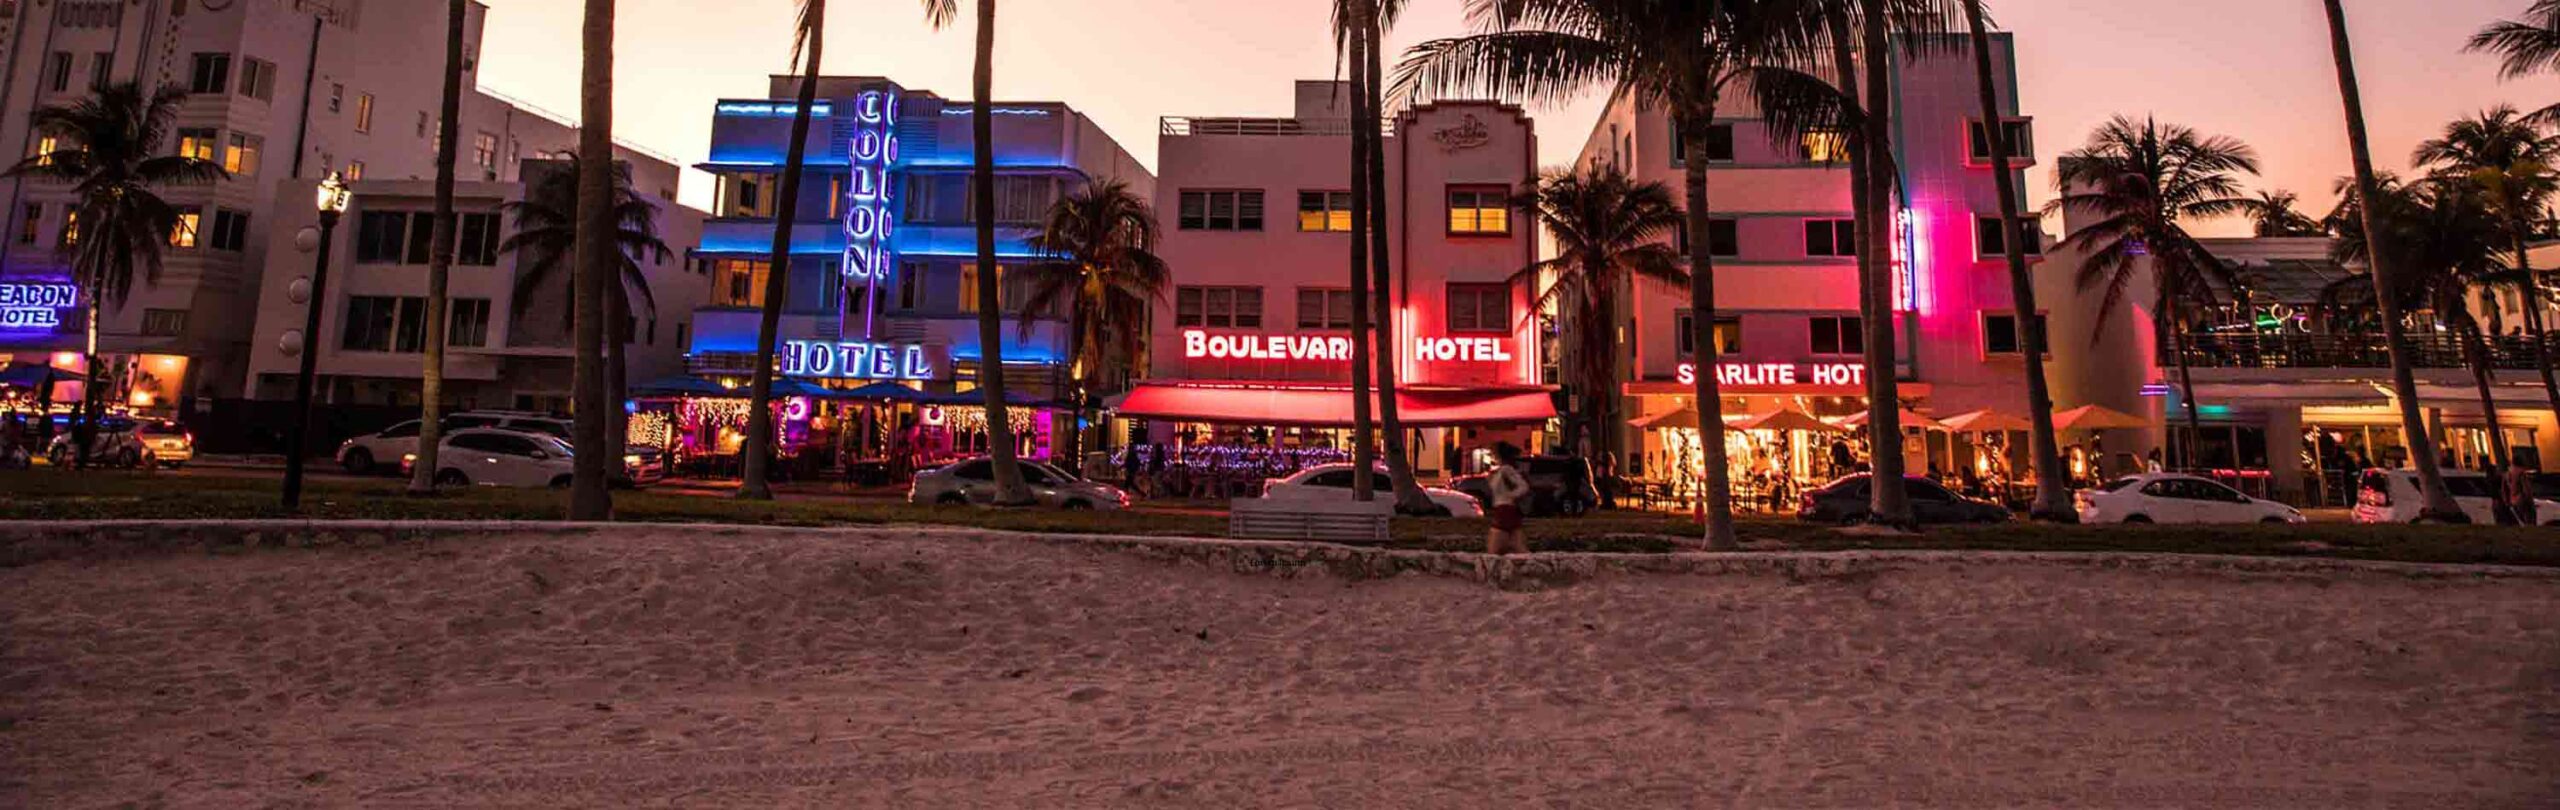 Hotel Employee Rate Miami, South Beach - key destination